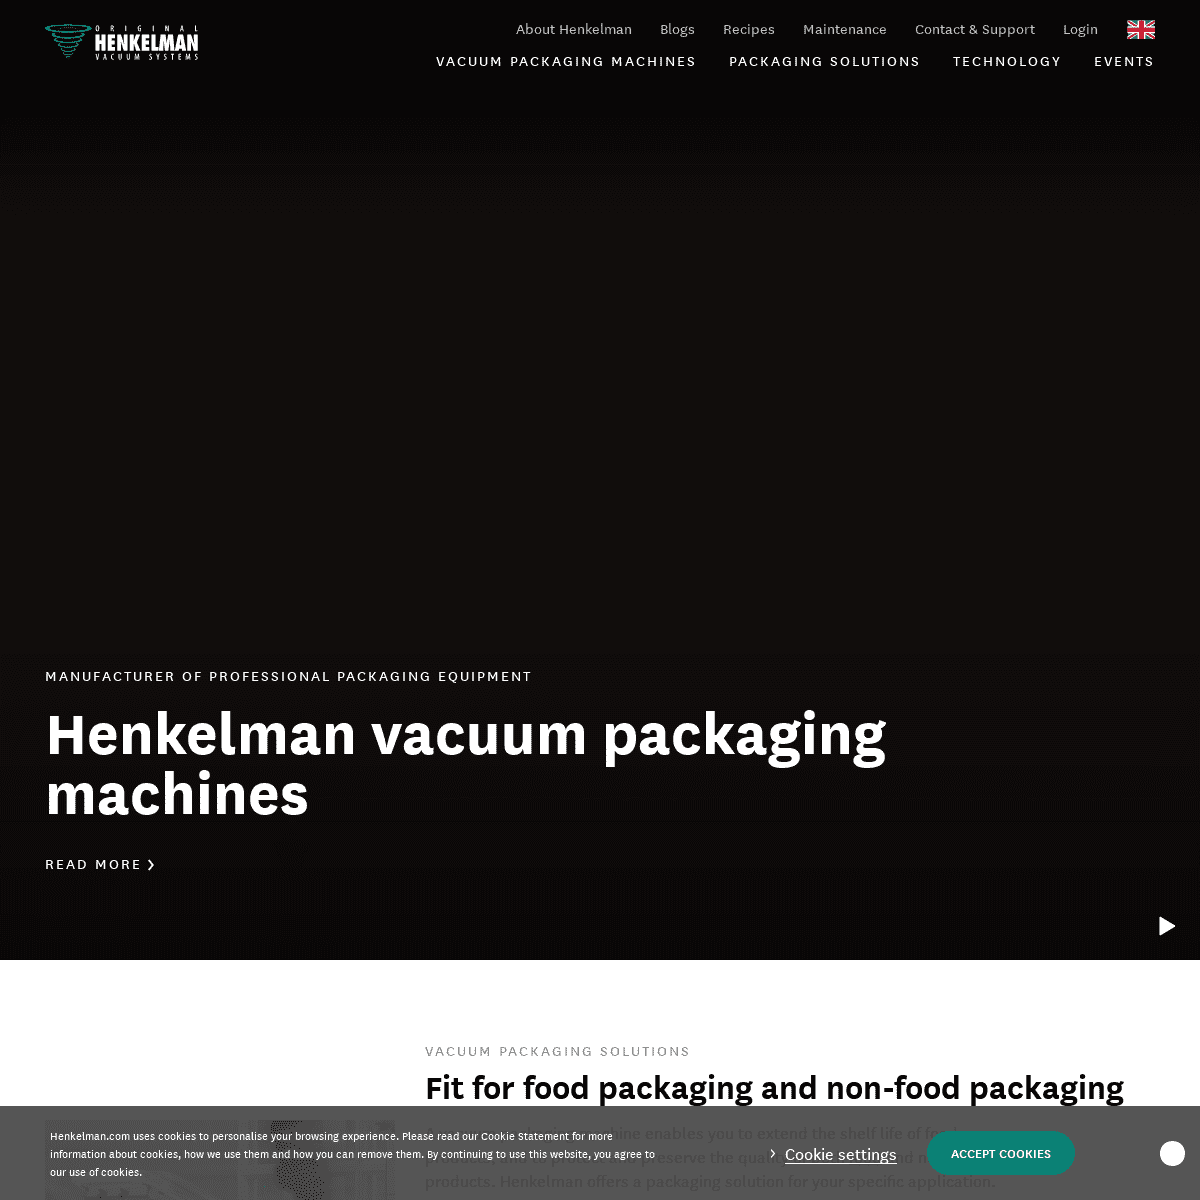 Meet Henkelman, manufacturer of vacuum packaging machines